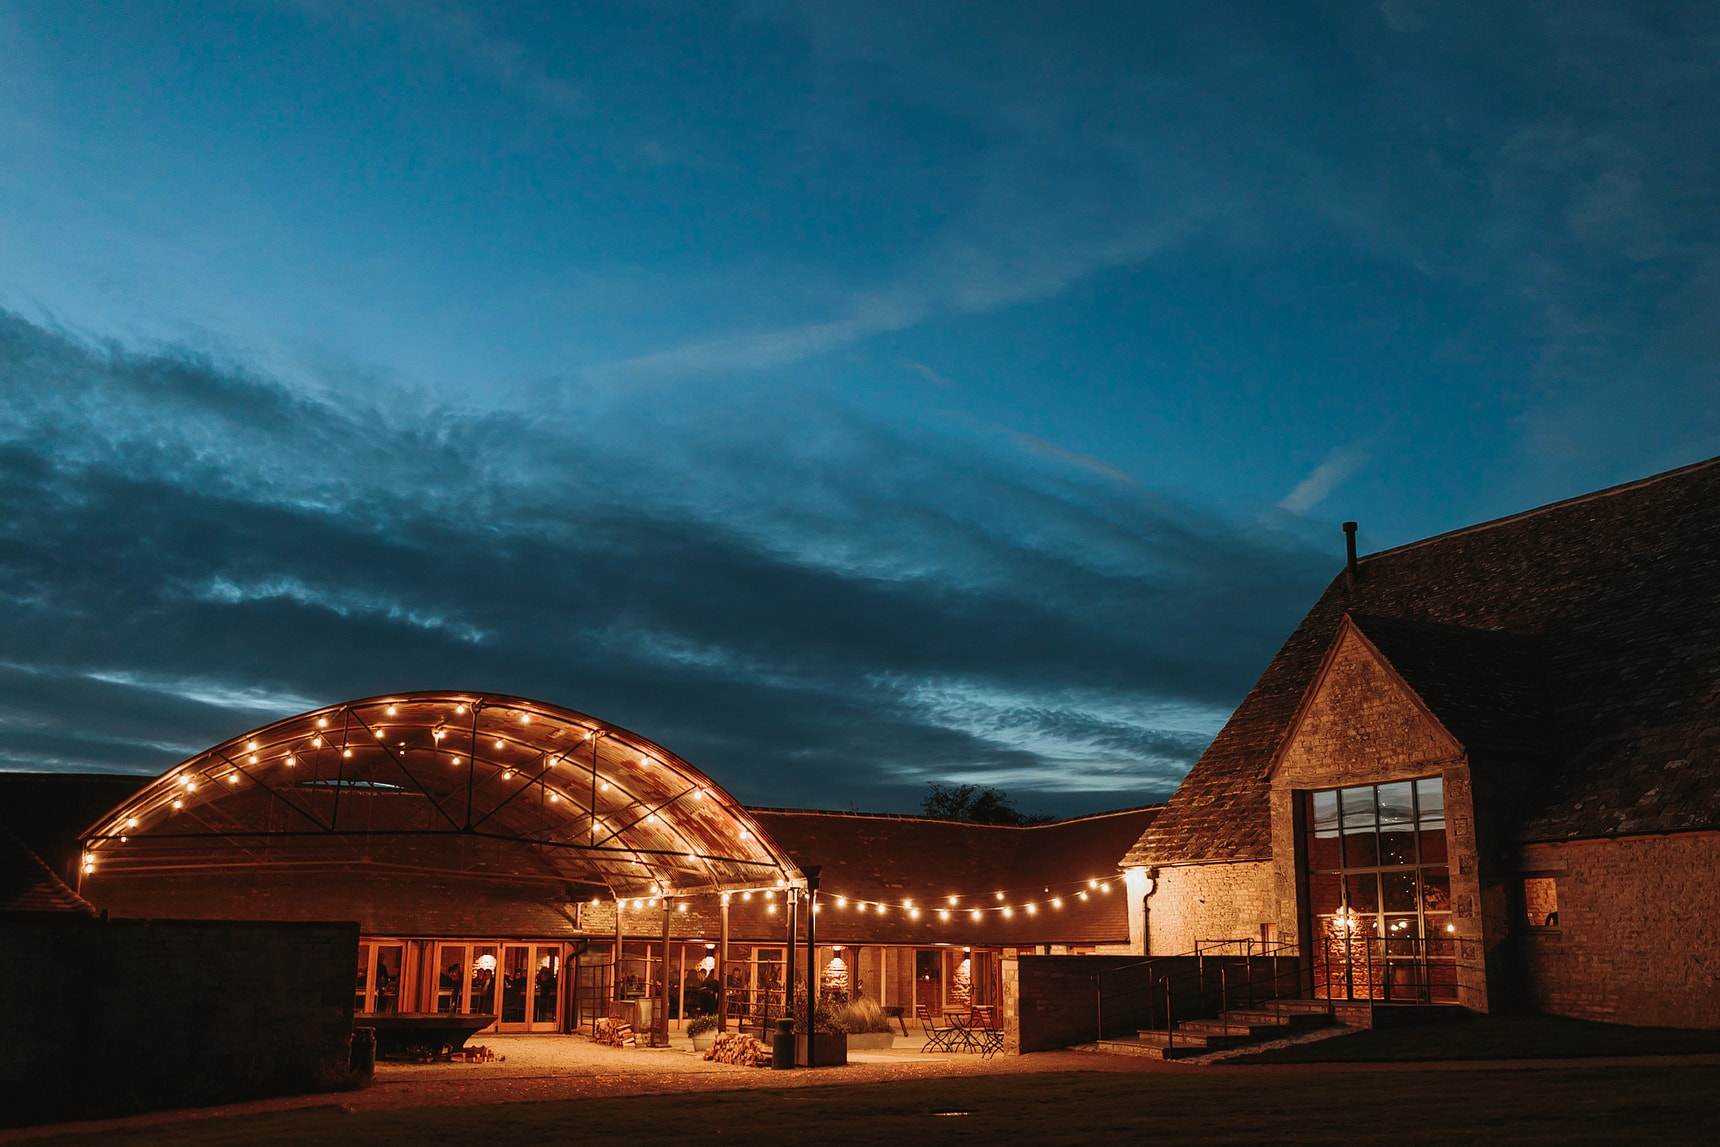 Evening photograph of a wedding venue with festoon lighting